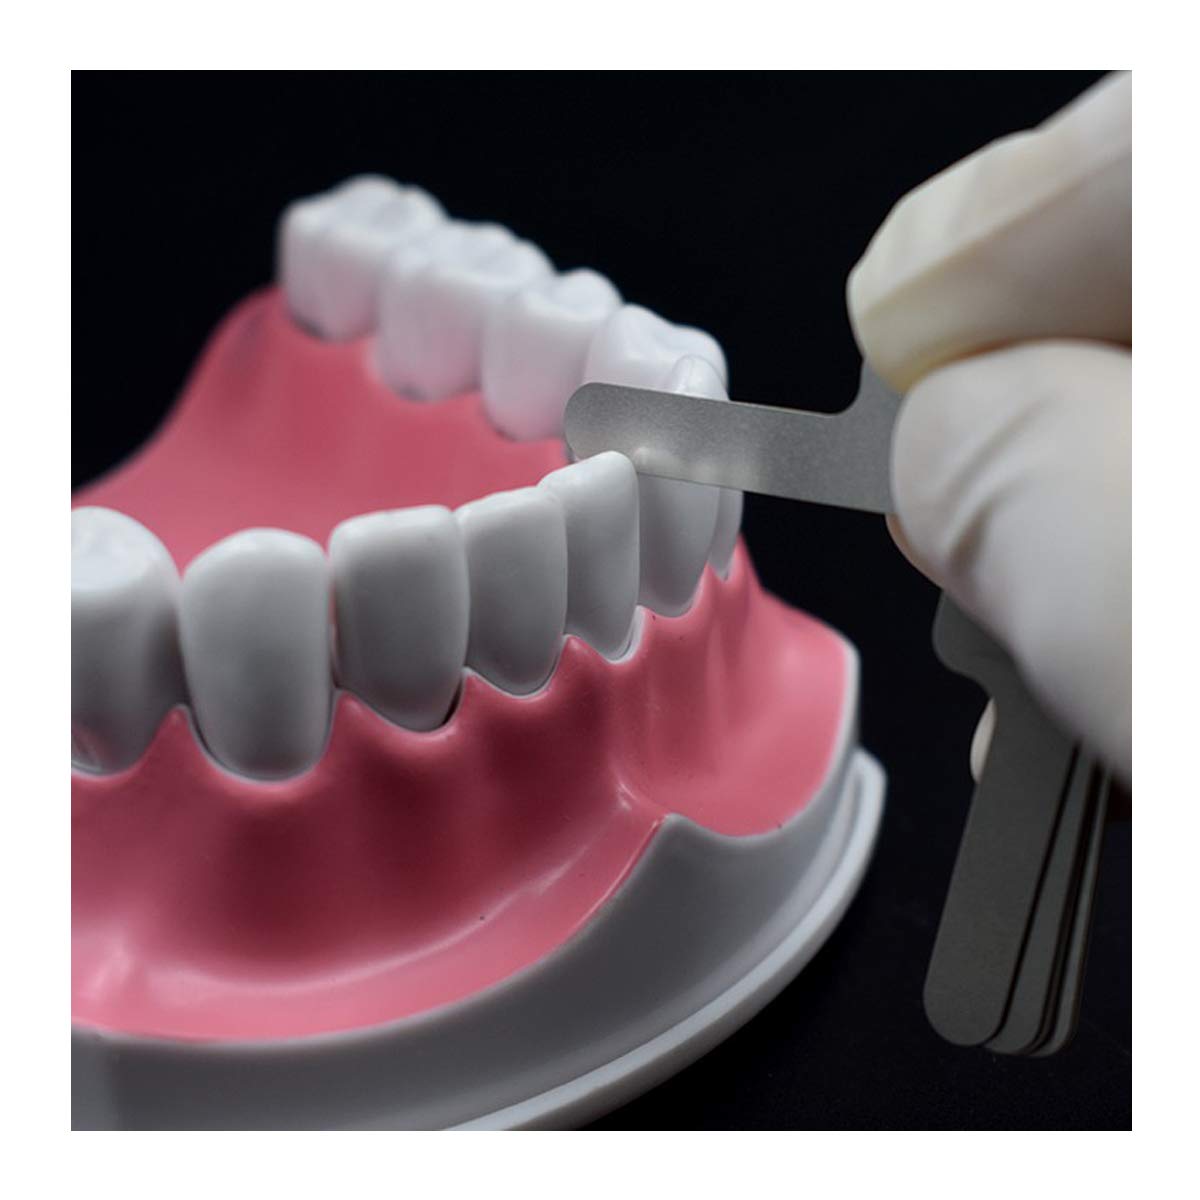 Orthodontic gap ruler Dental Interproximal Reduction Gauge Ruler Tooth Gap Measuring IPR System Stainless Steel Orthodontic Instrument